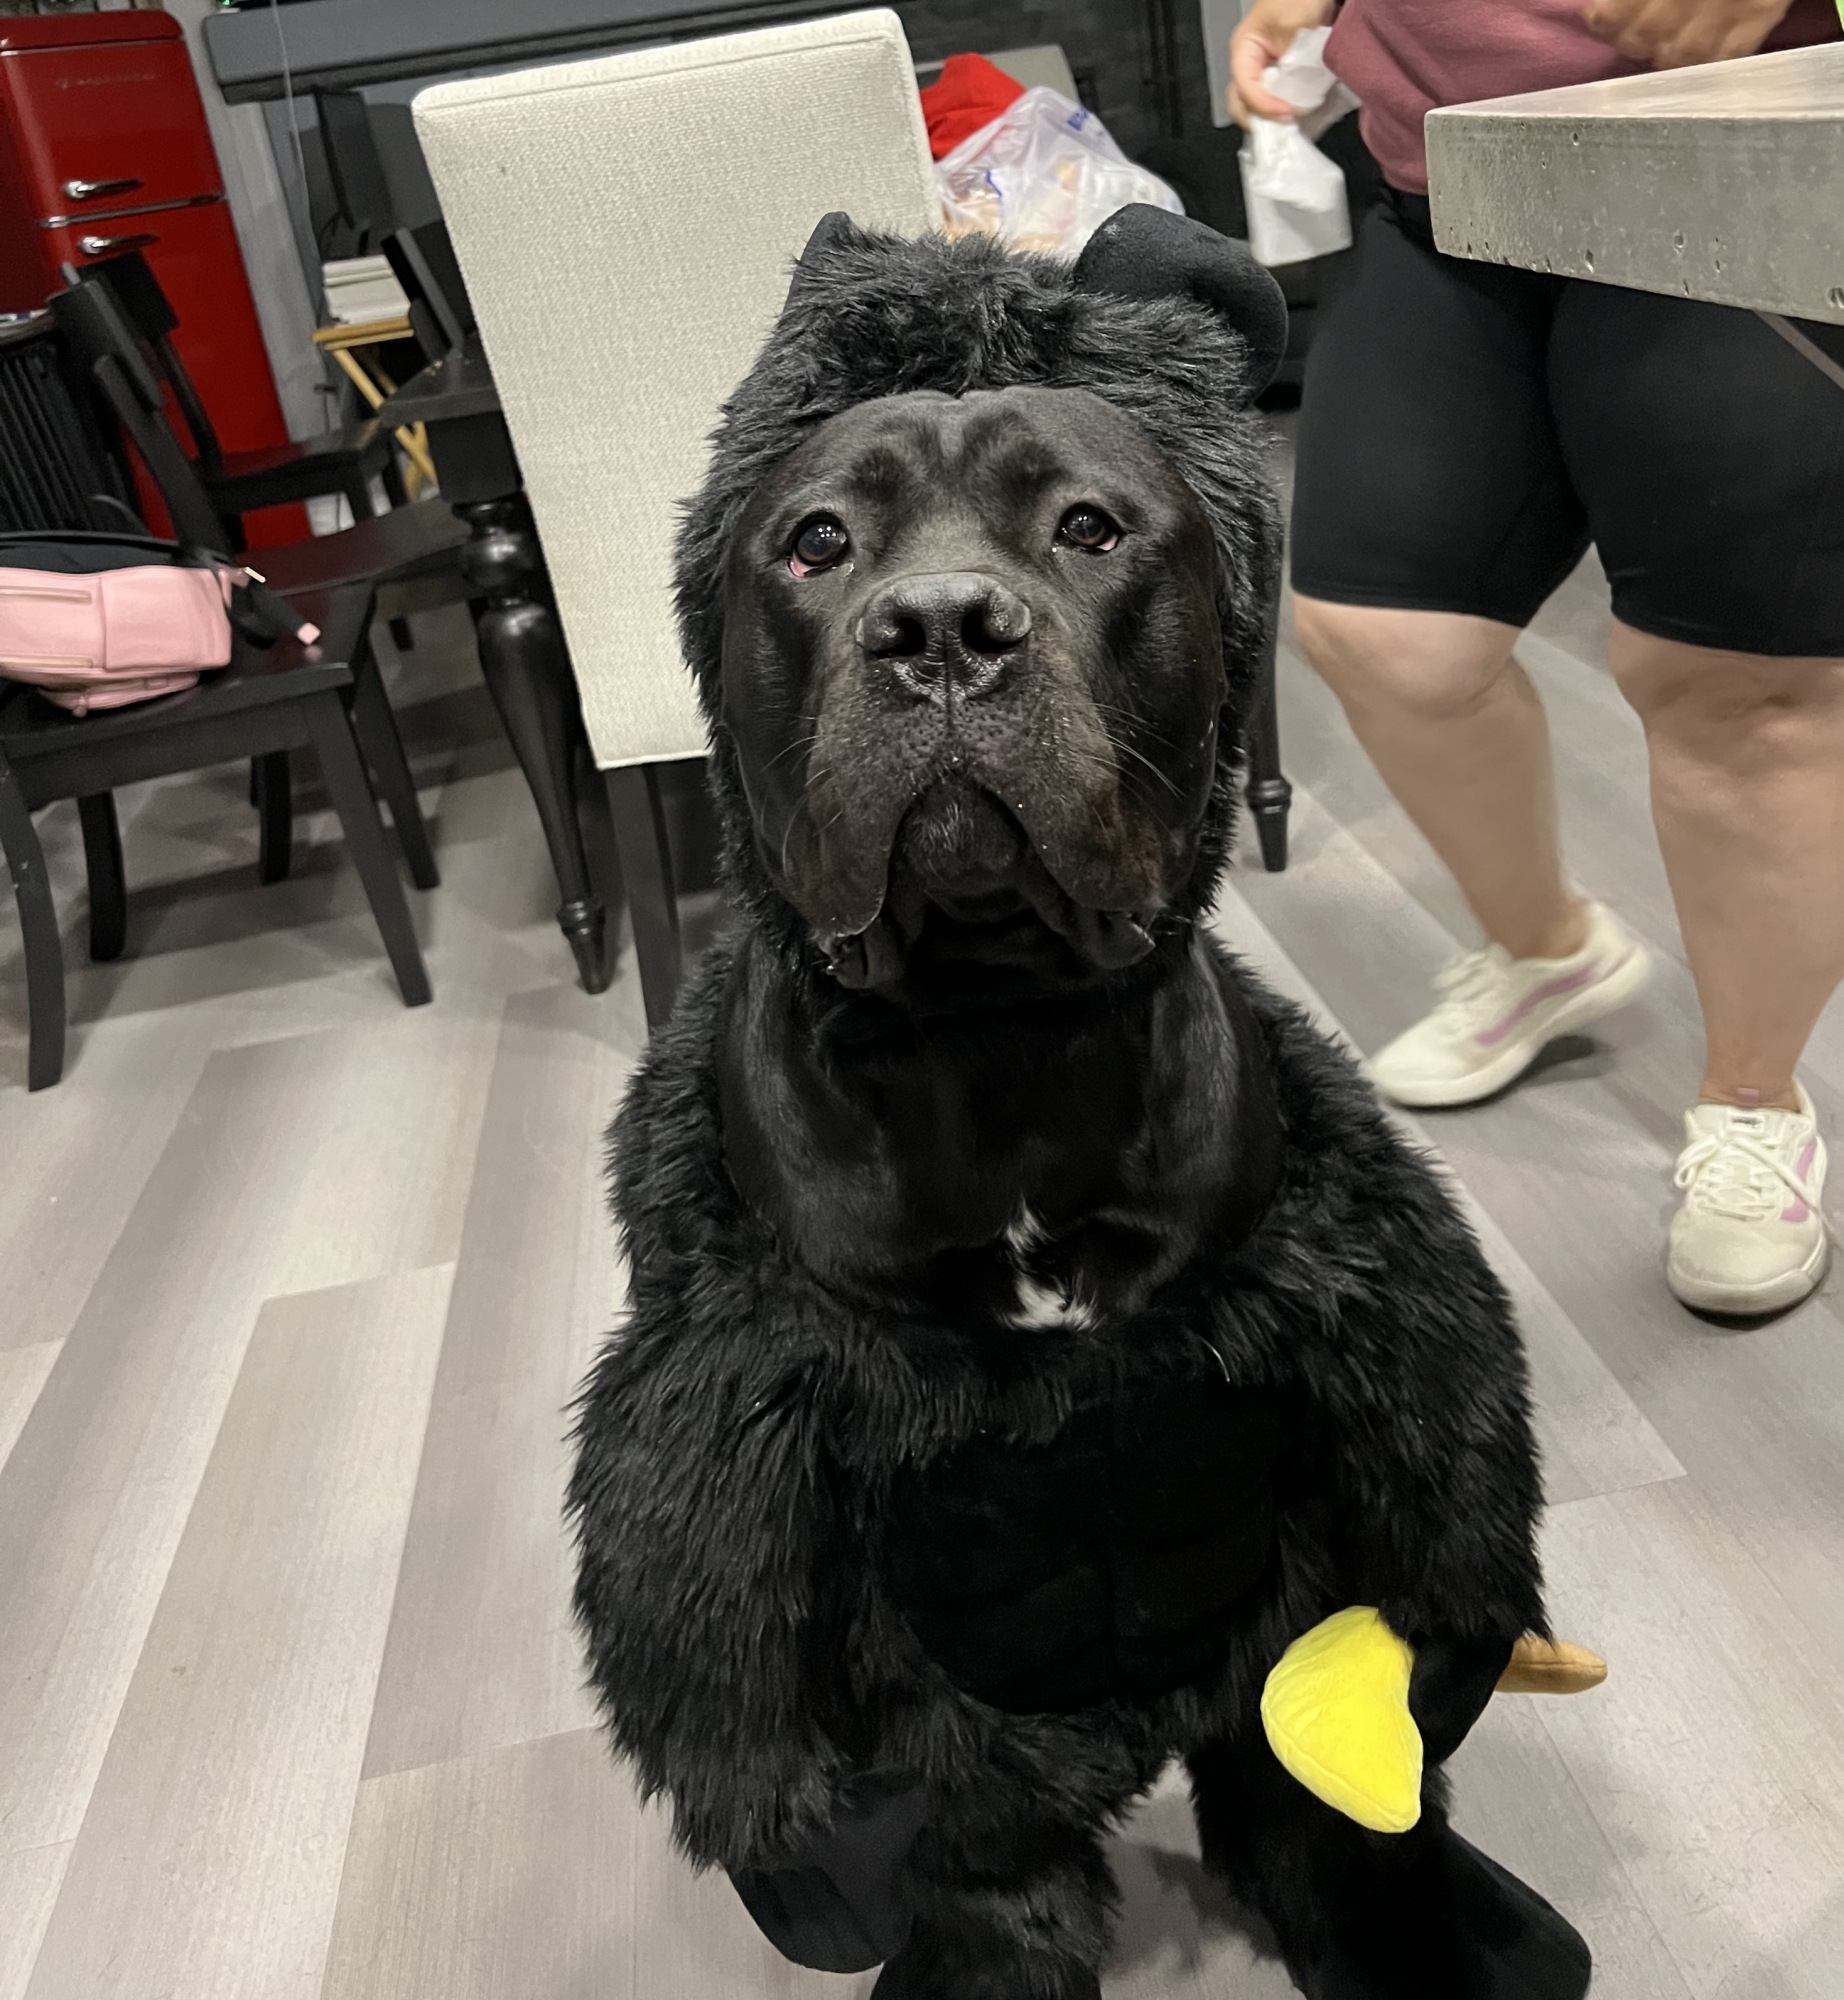 Dog dressed as a gorilla.